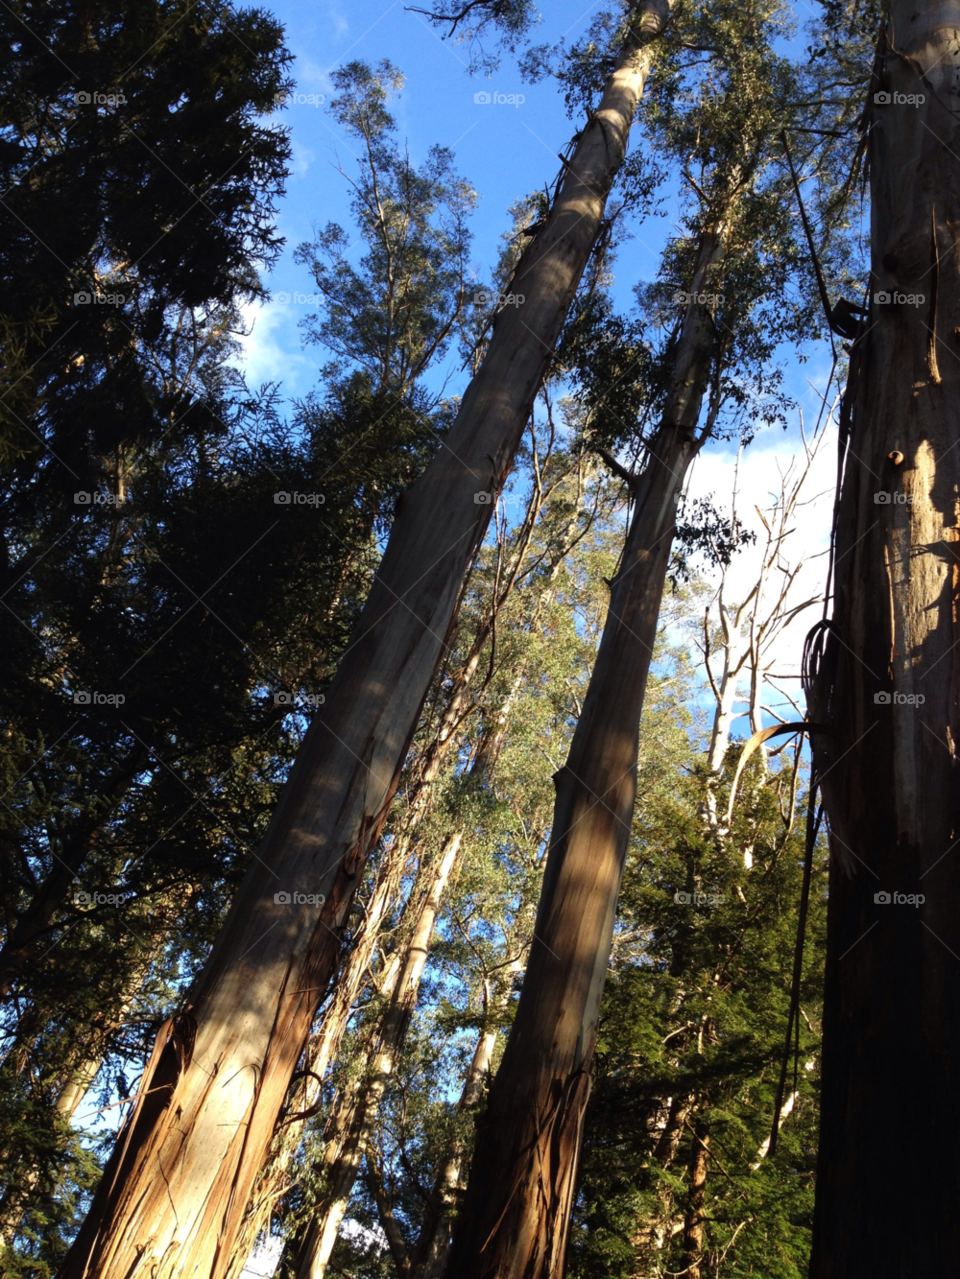 mount dandenong victoria australia trees forest bush by ColinE